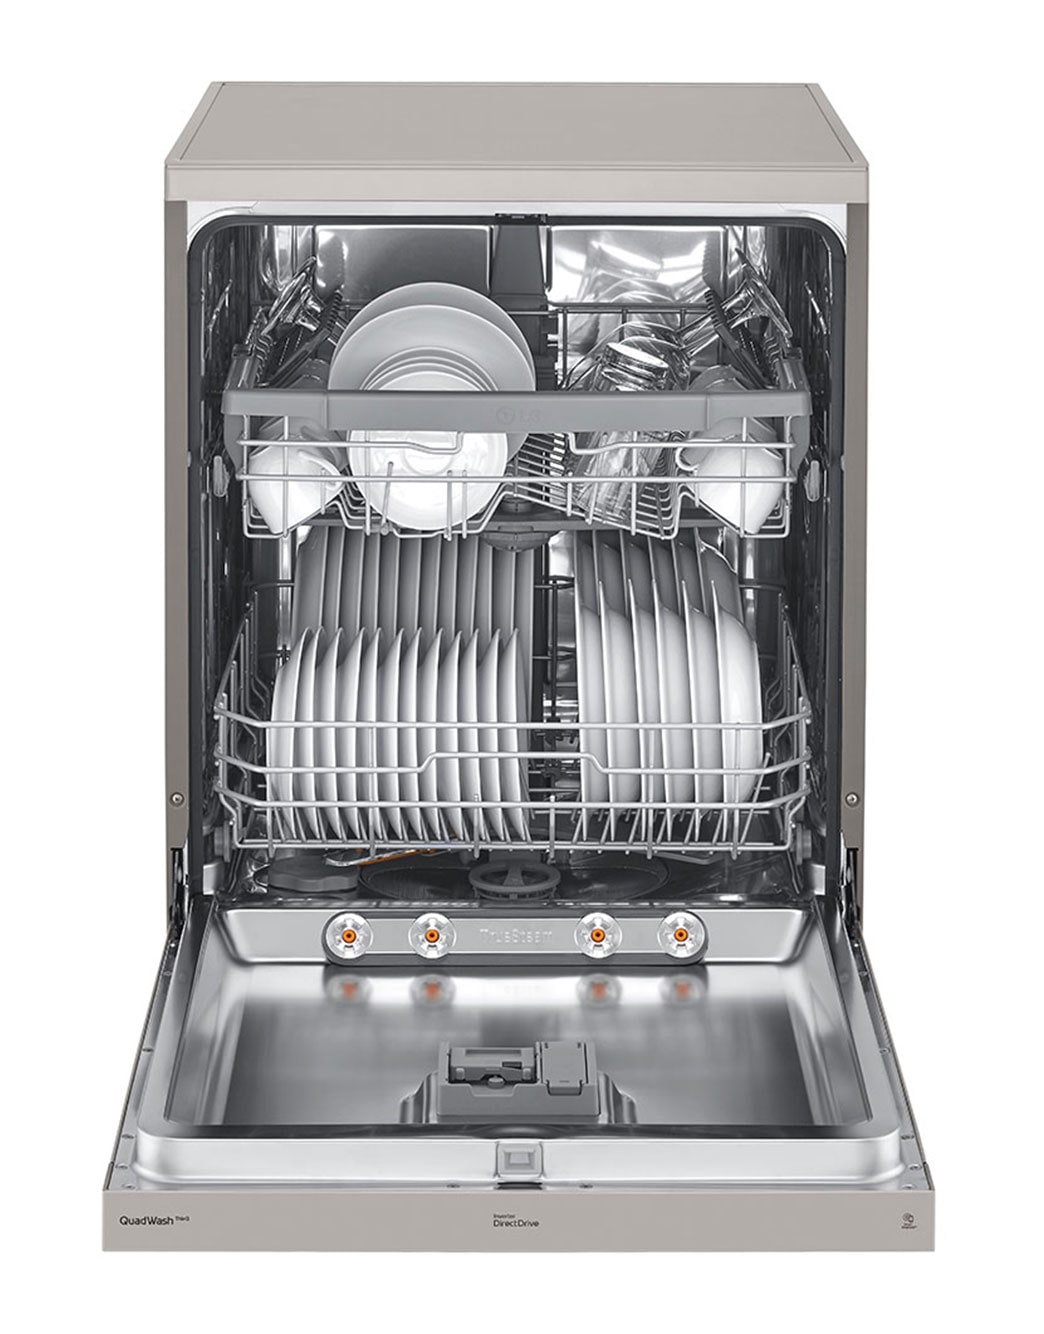 LG QuadWash™ Steam Dishwasher, Fewer Water Spots | LG UAE